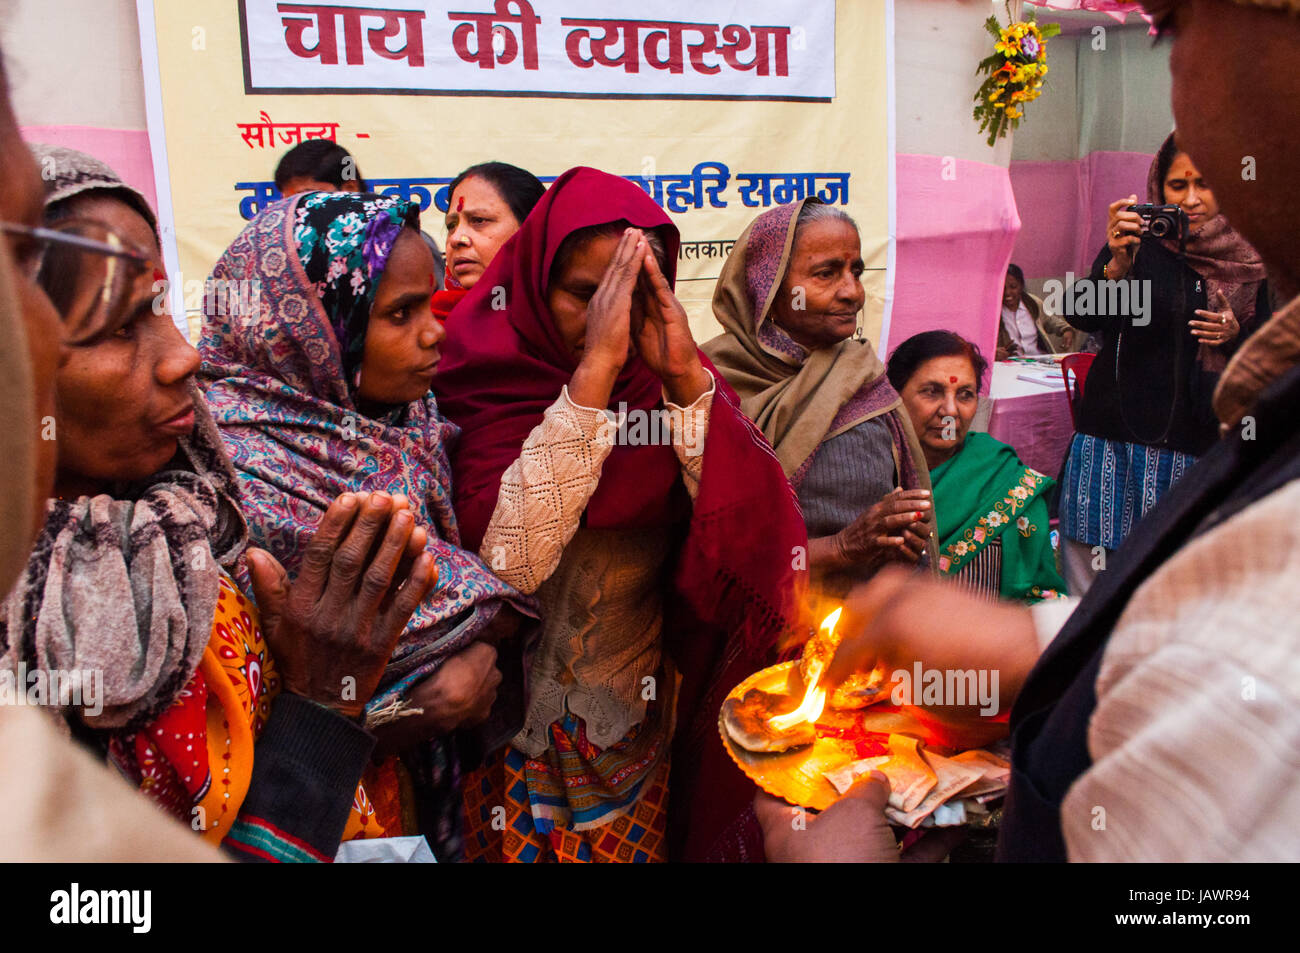 BABUGHAT, KOLKATA, WEST BENGAL / INDIA - 9TH JANUARY 2013 : Hindu female devotees praying holy fire on 9th January, 2013 in Babughat transit Camp, Kolkata. They are on their way to Gangasagar (Sagar) . Stock Photo